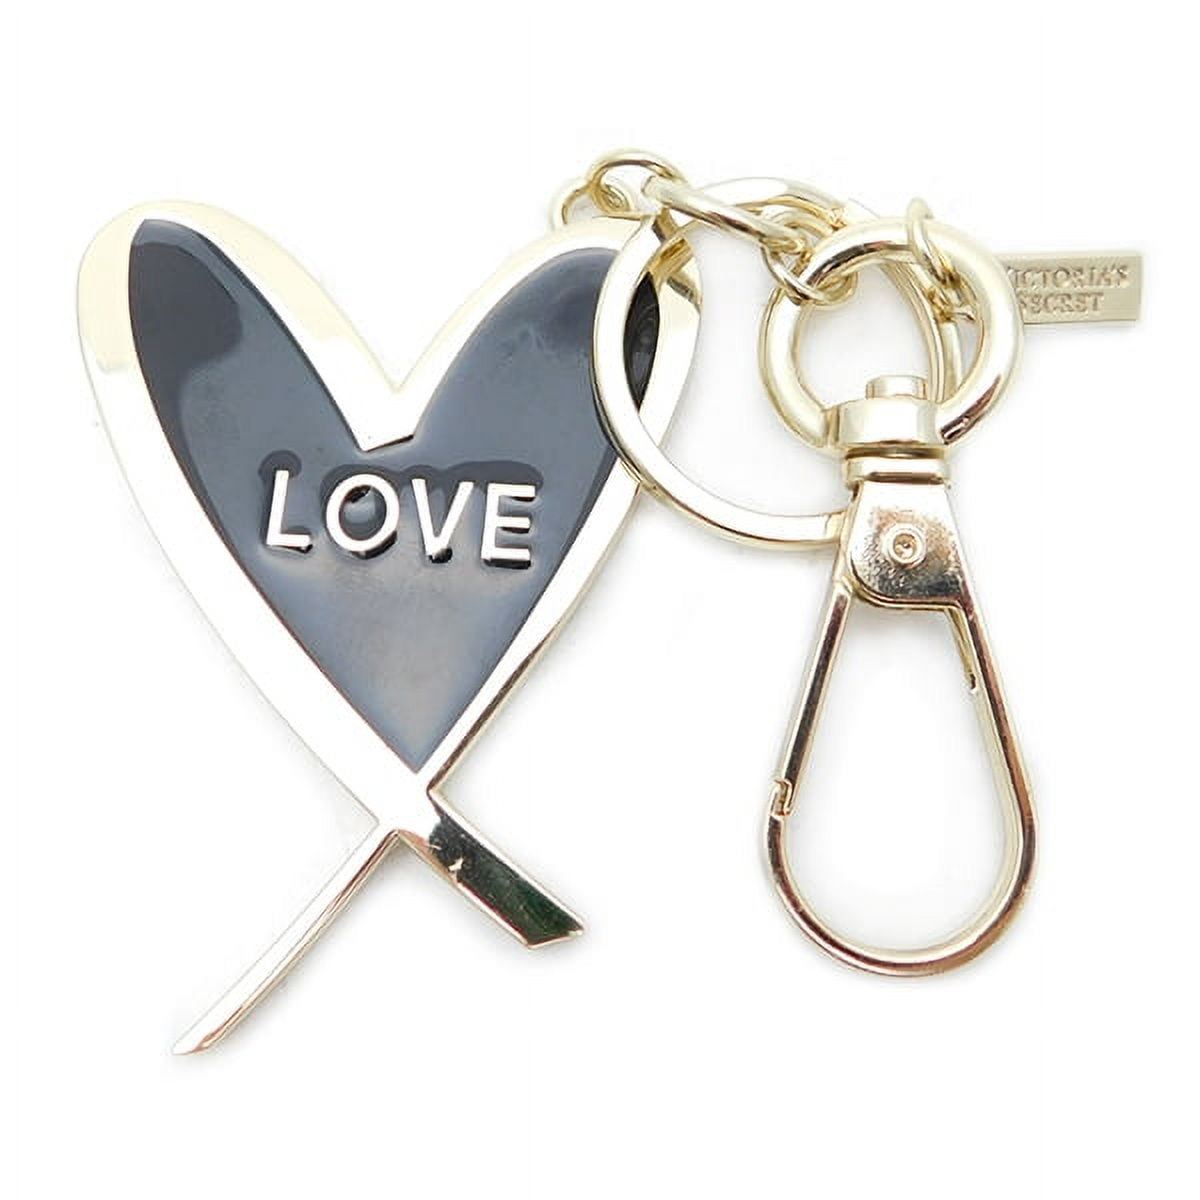 Love Victoria's Secret Heart Plastic Keychain Clip Tag